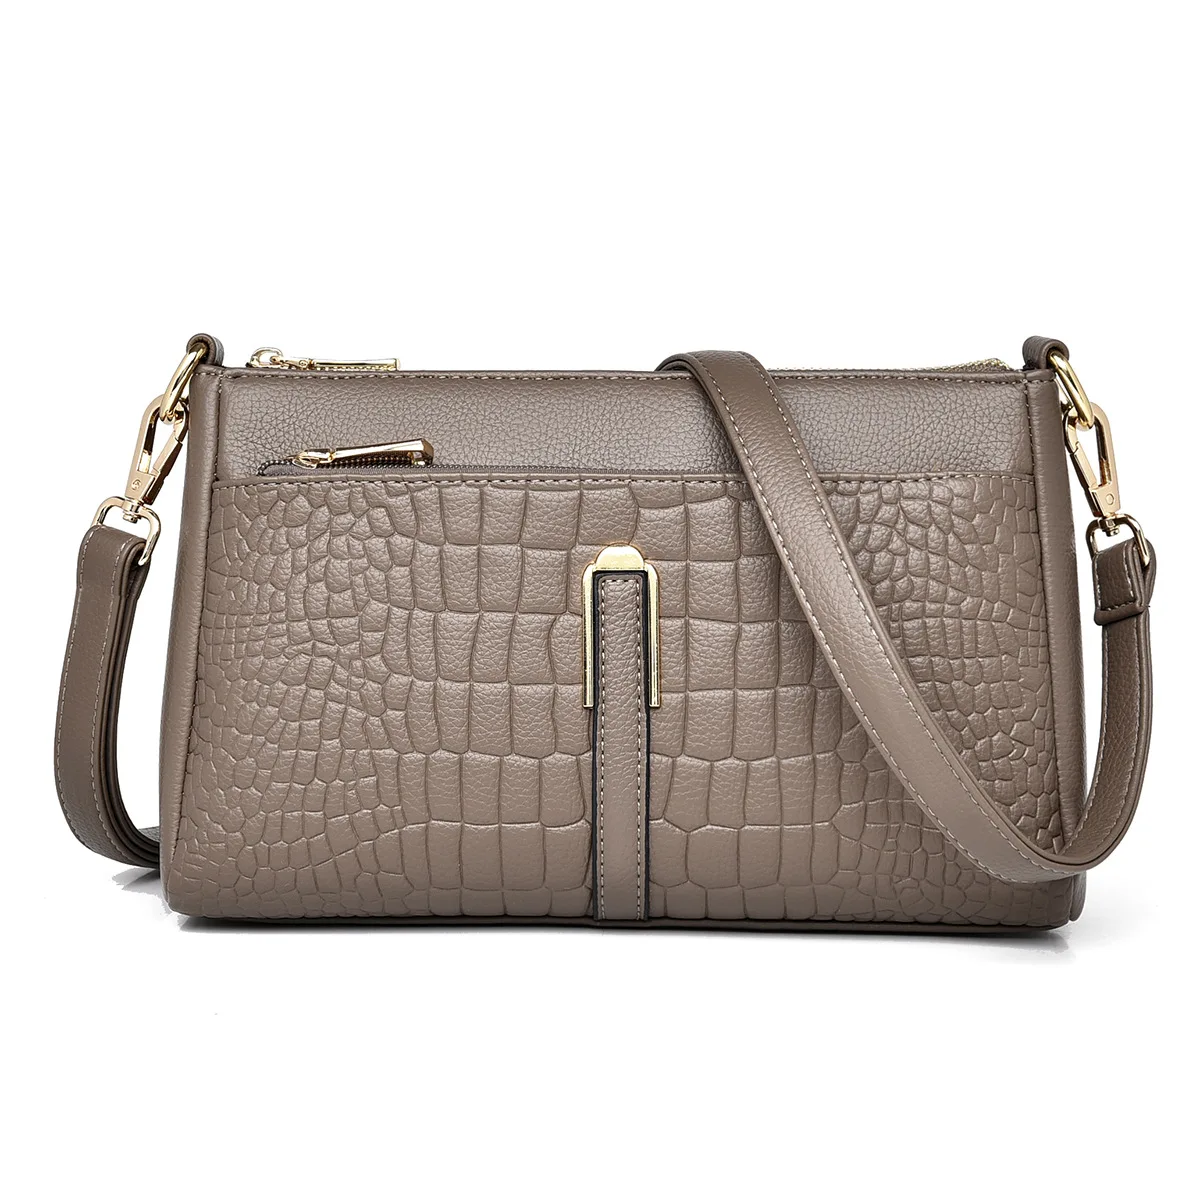 Women Hand Bags Crossbody Shoulder Ladies Luxury For Women Designer Handbags Famous Brands Purses And Handbags